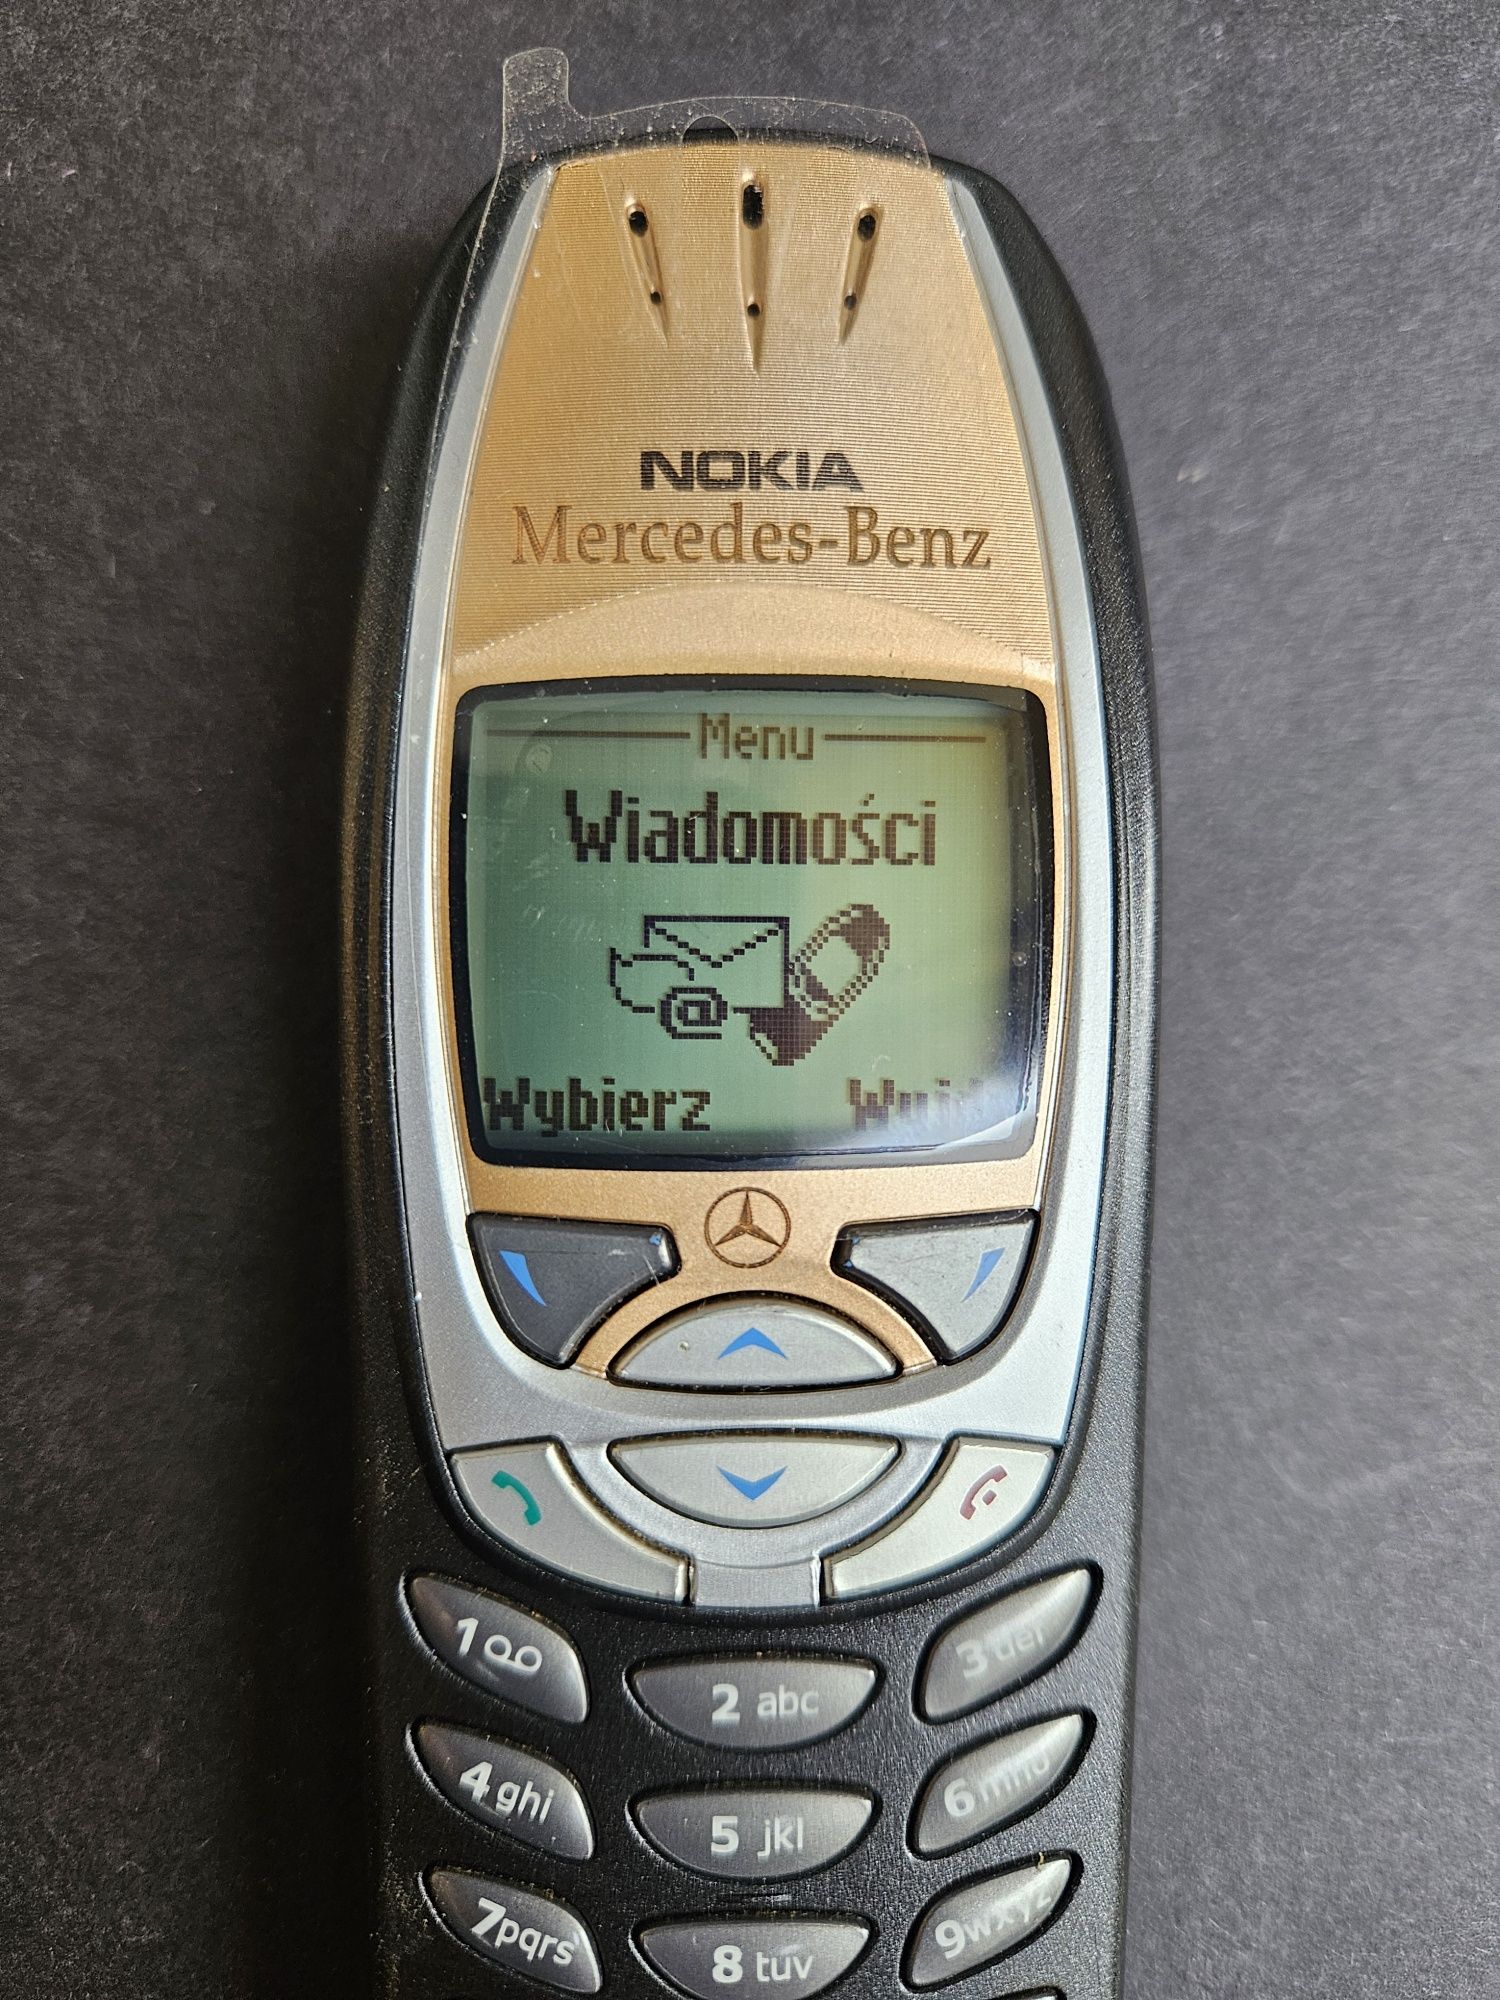 Nokia 6310i Mercedes Benz wersja Limited Menu PL